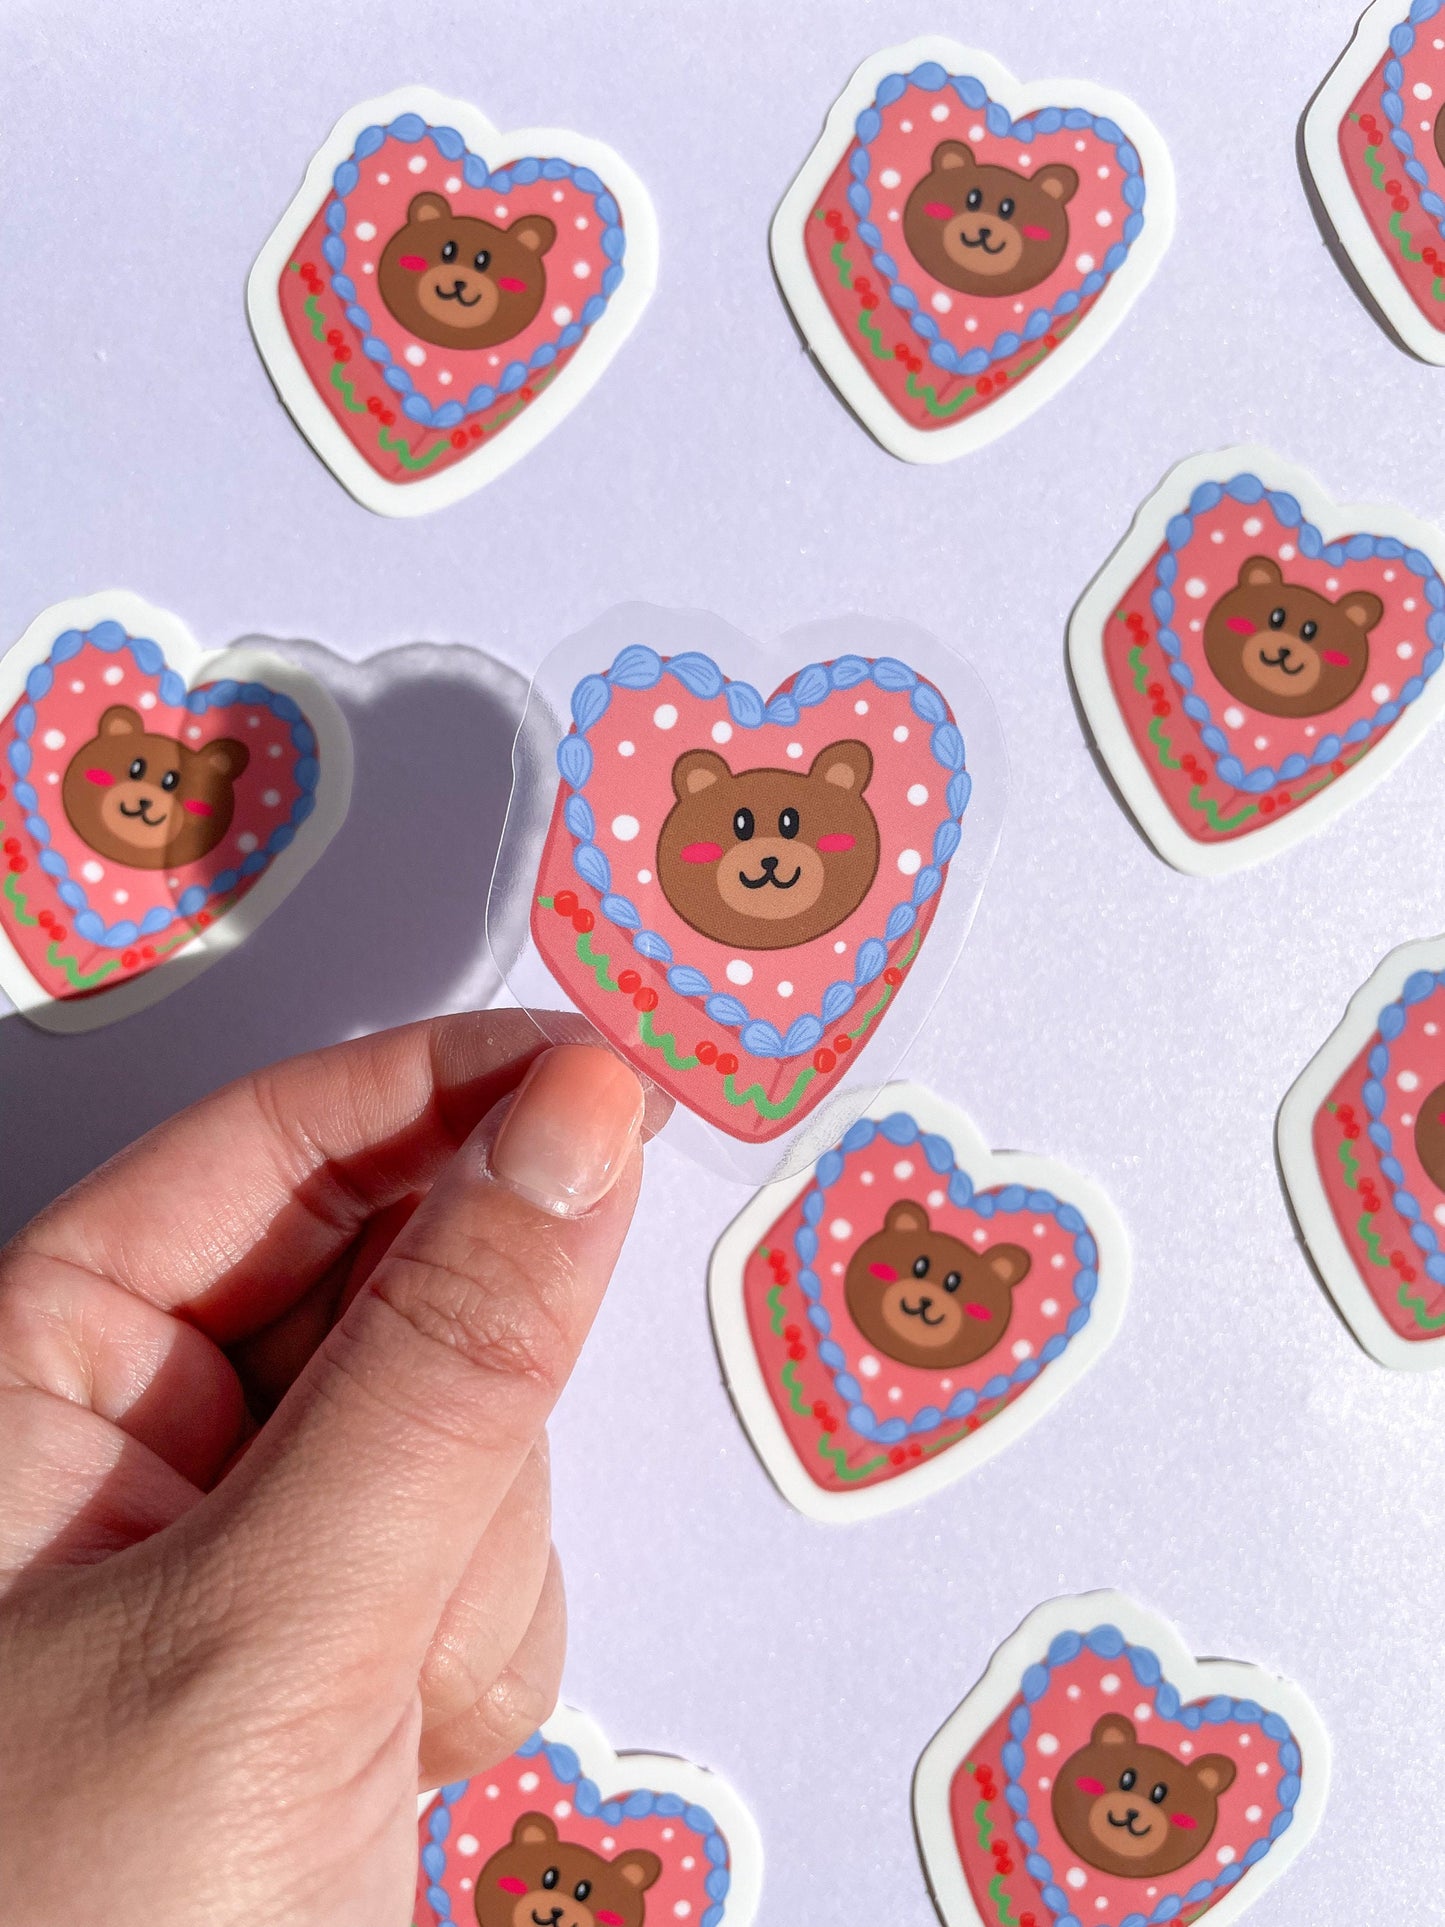 Beary Heart Cake Sticker//Digital Art//Heart Cake Stickers//Illustration//kawaii//Stationary//Waterproof Sticker